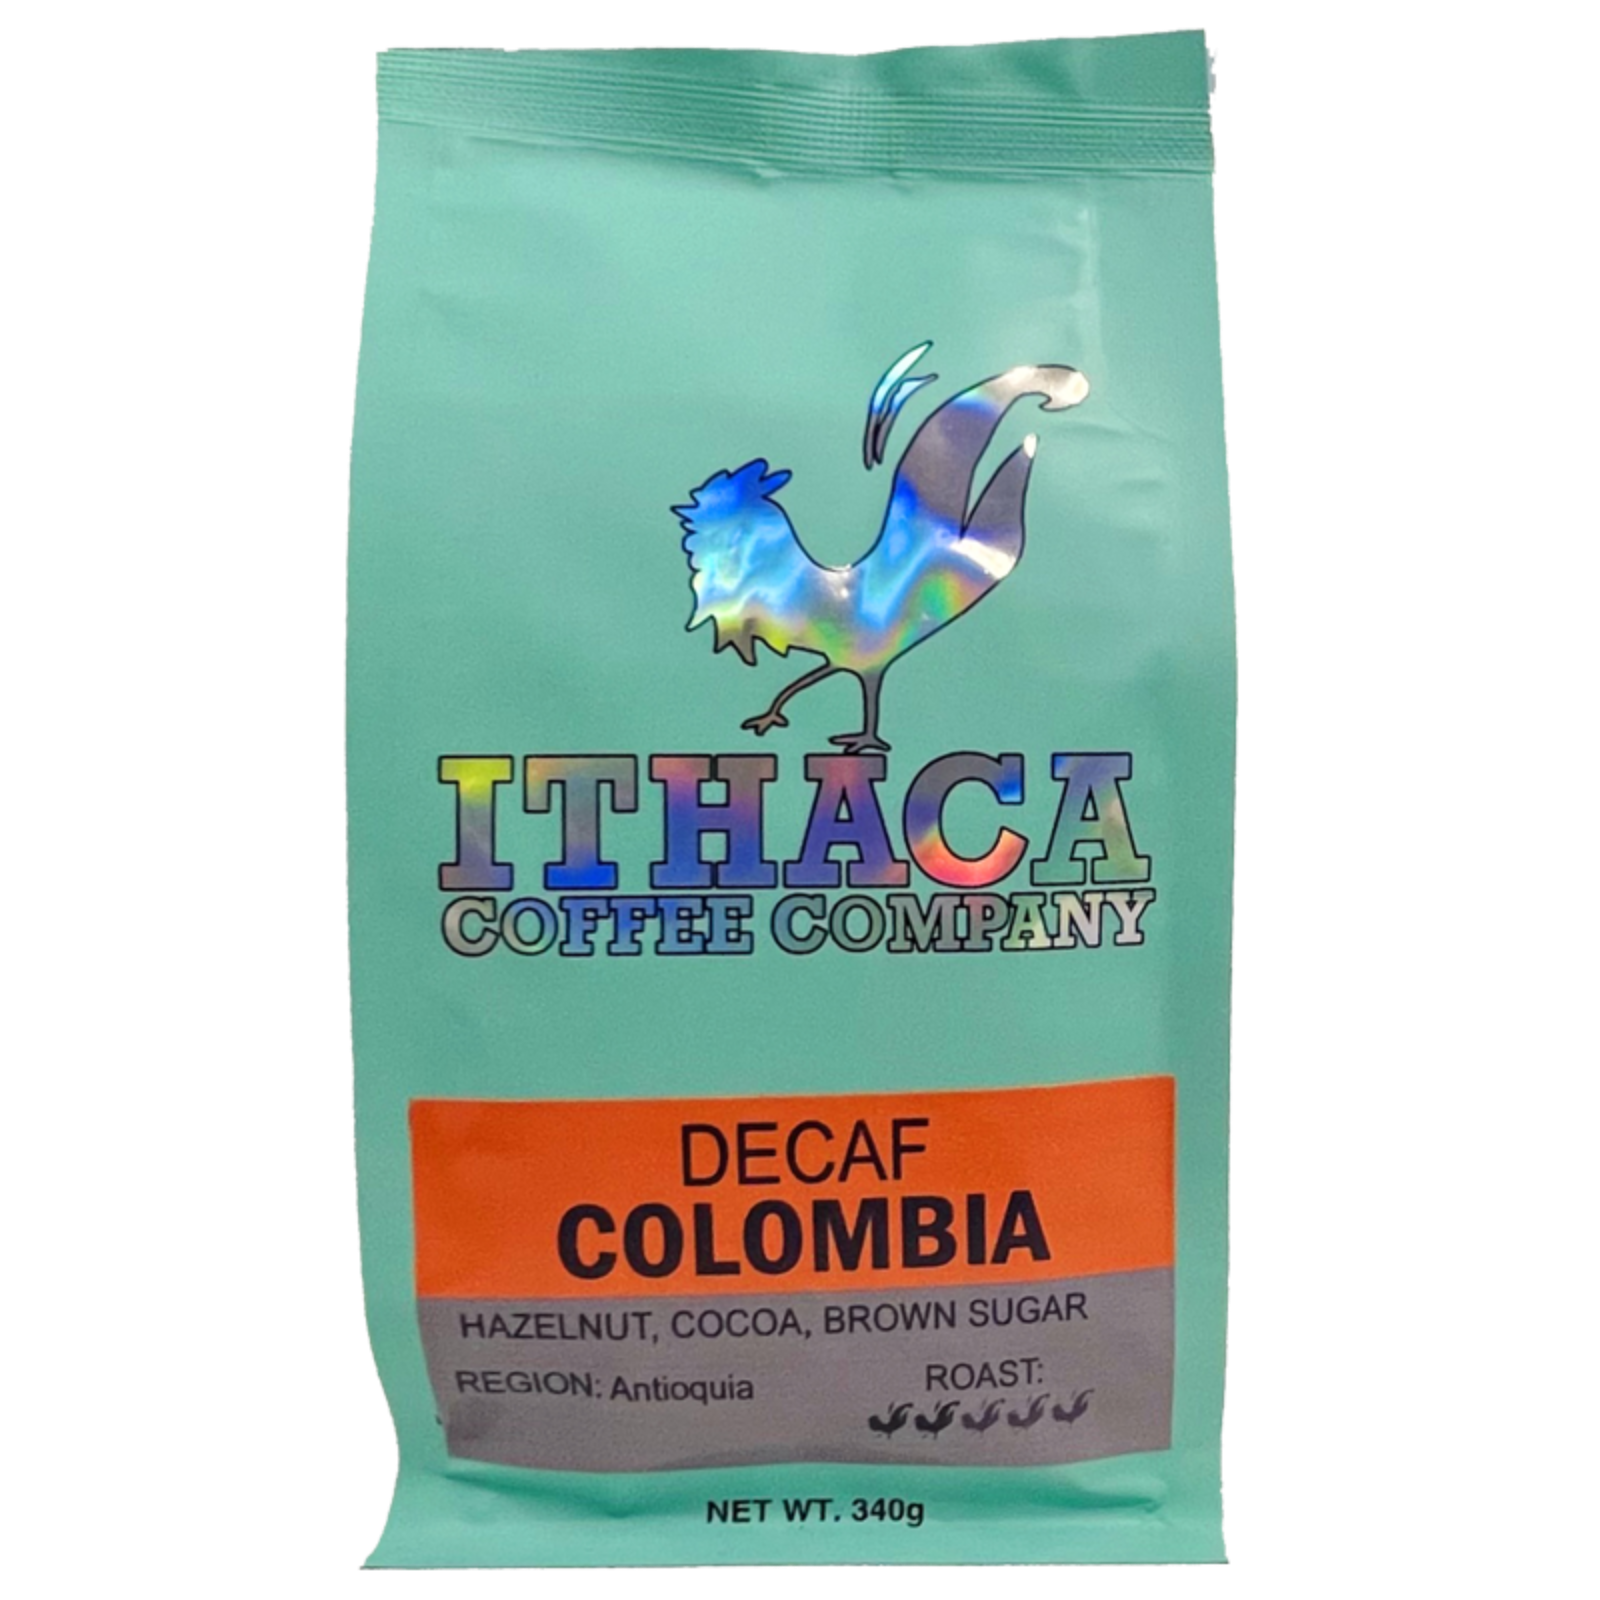 Decaf Colombia - 12oz Bag